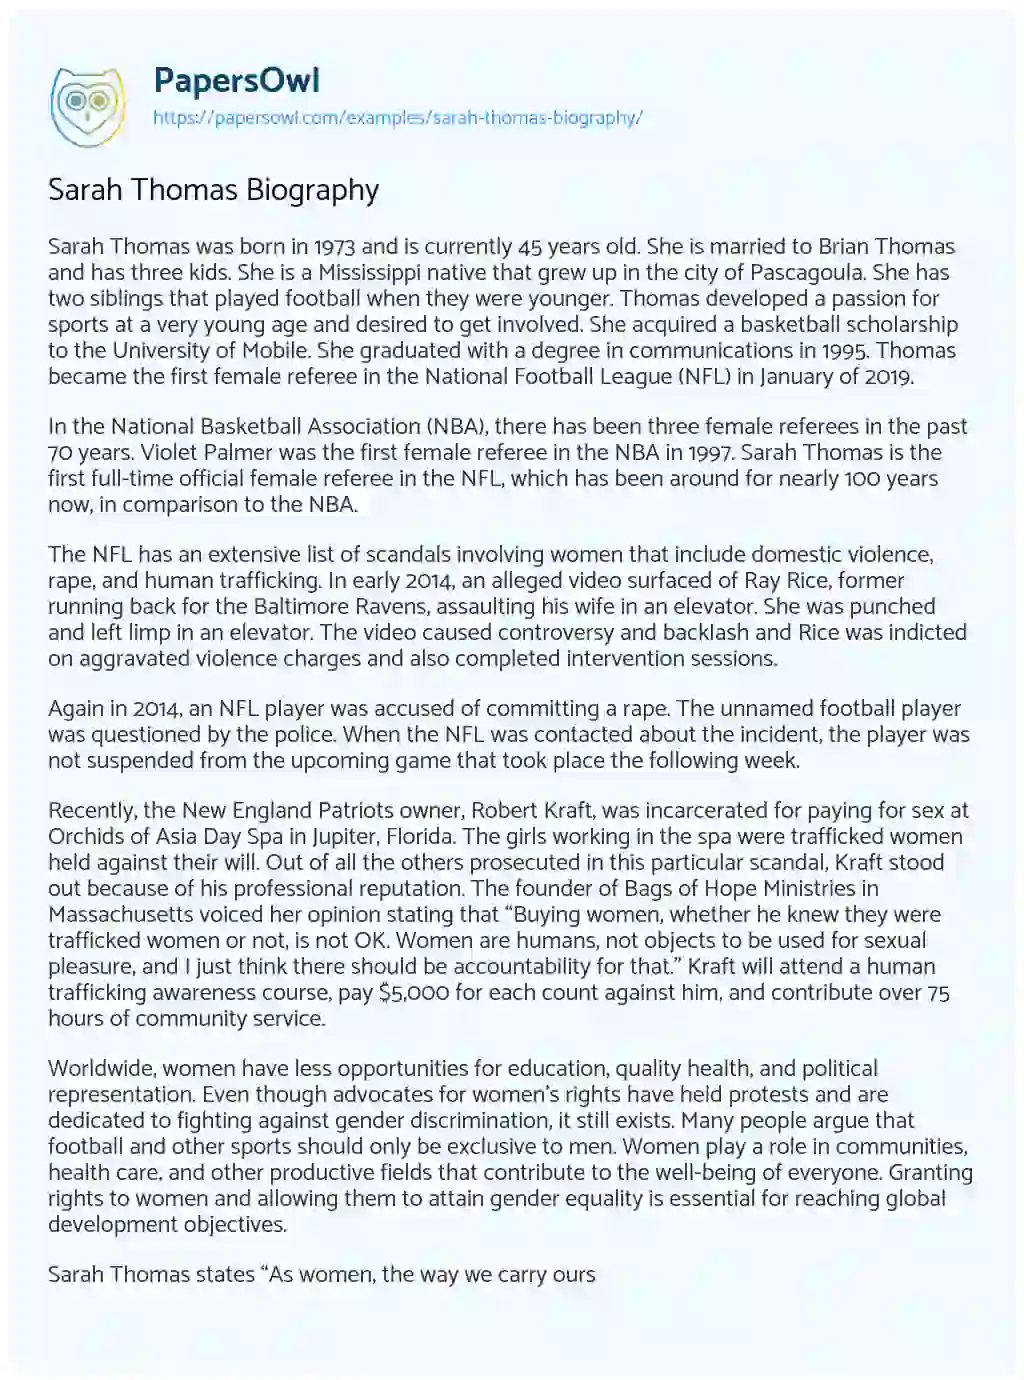 Essay on Sarah Thomas Biography